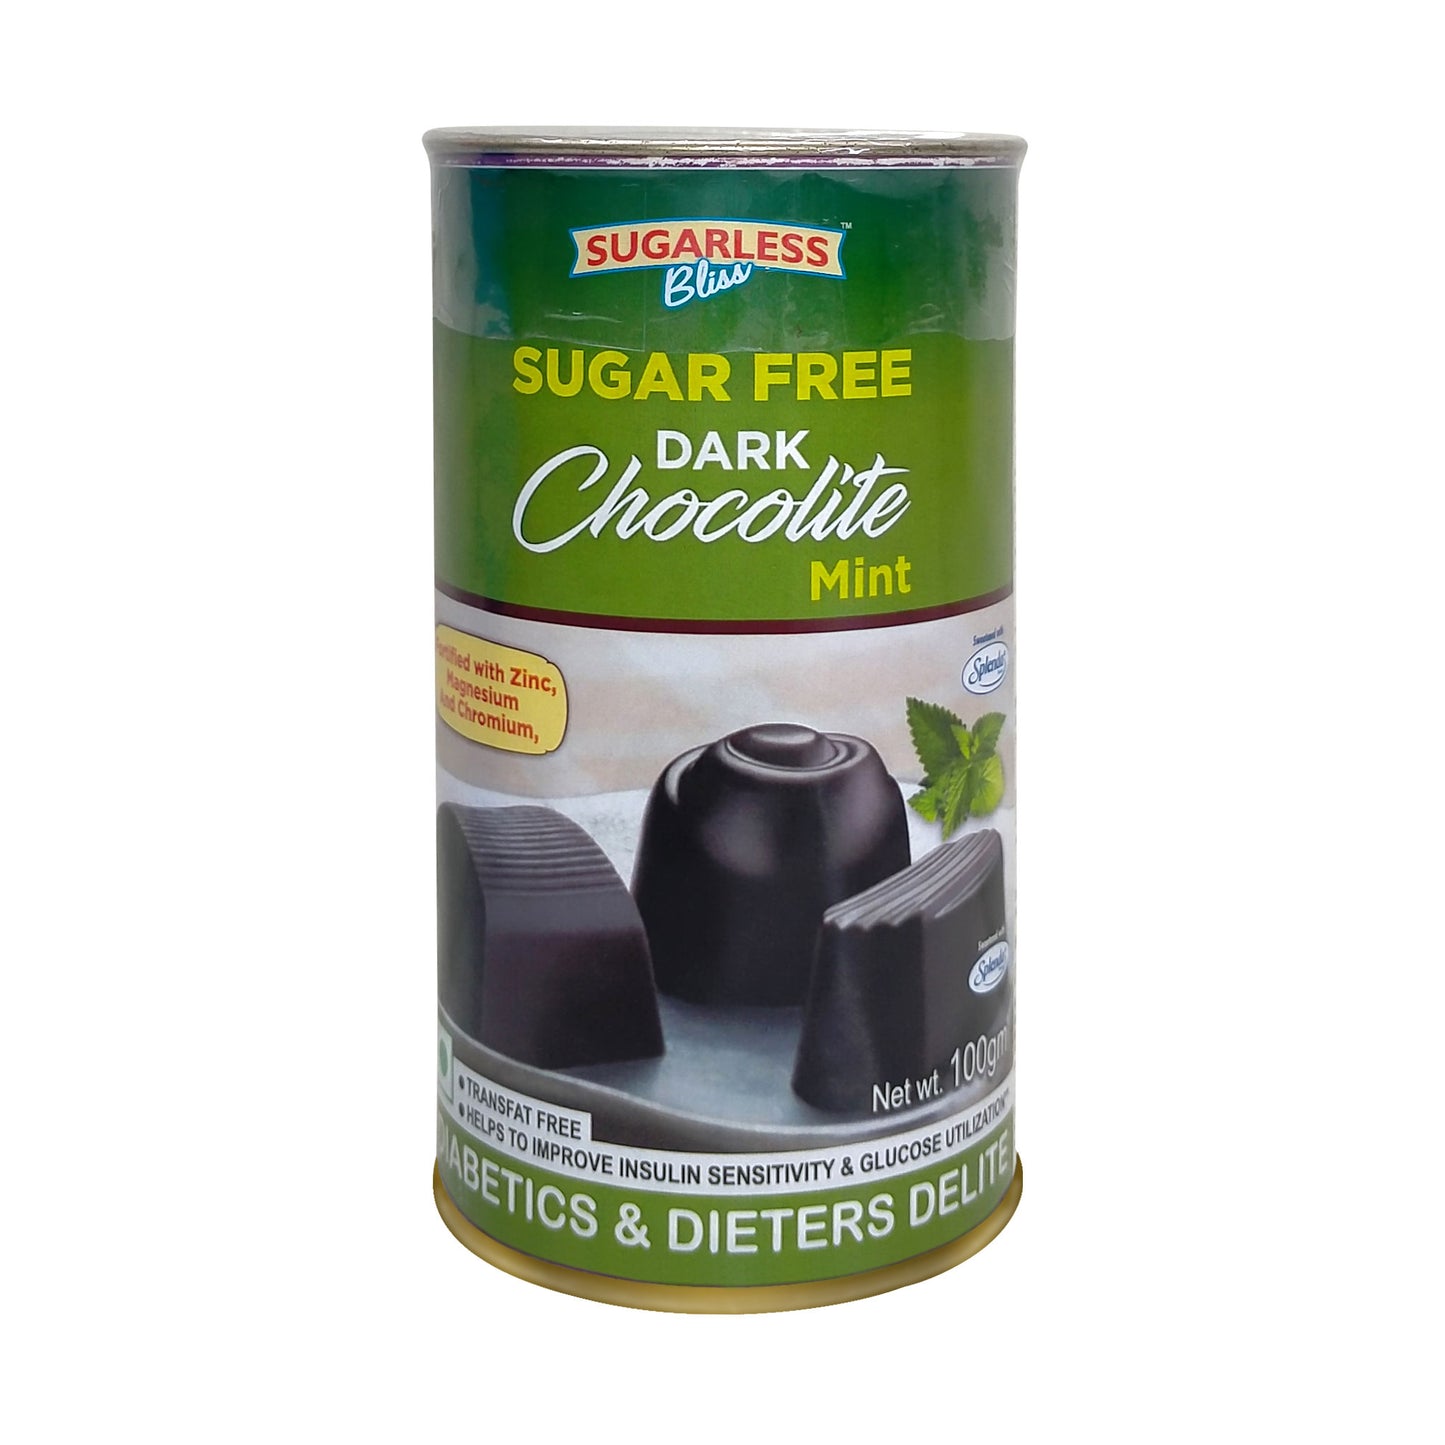 Sugar Free Dark Chocolate - Mint